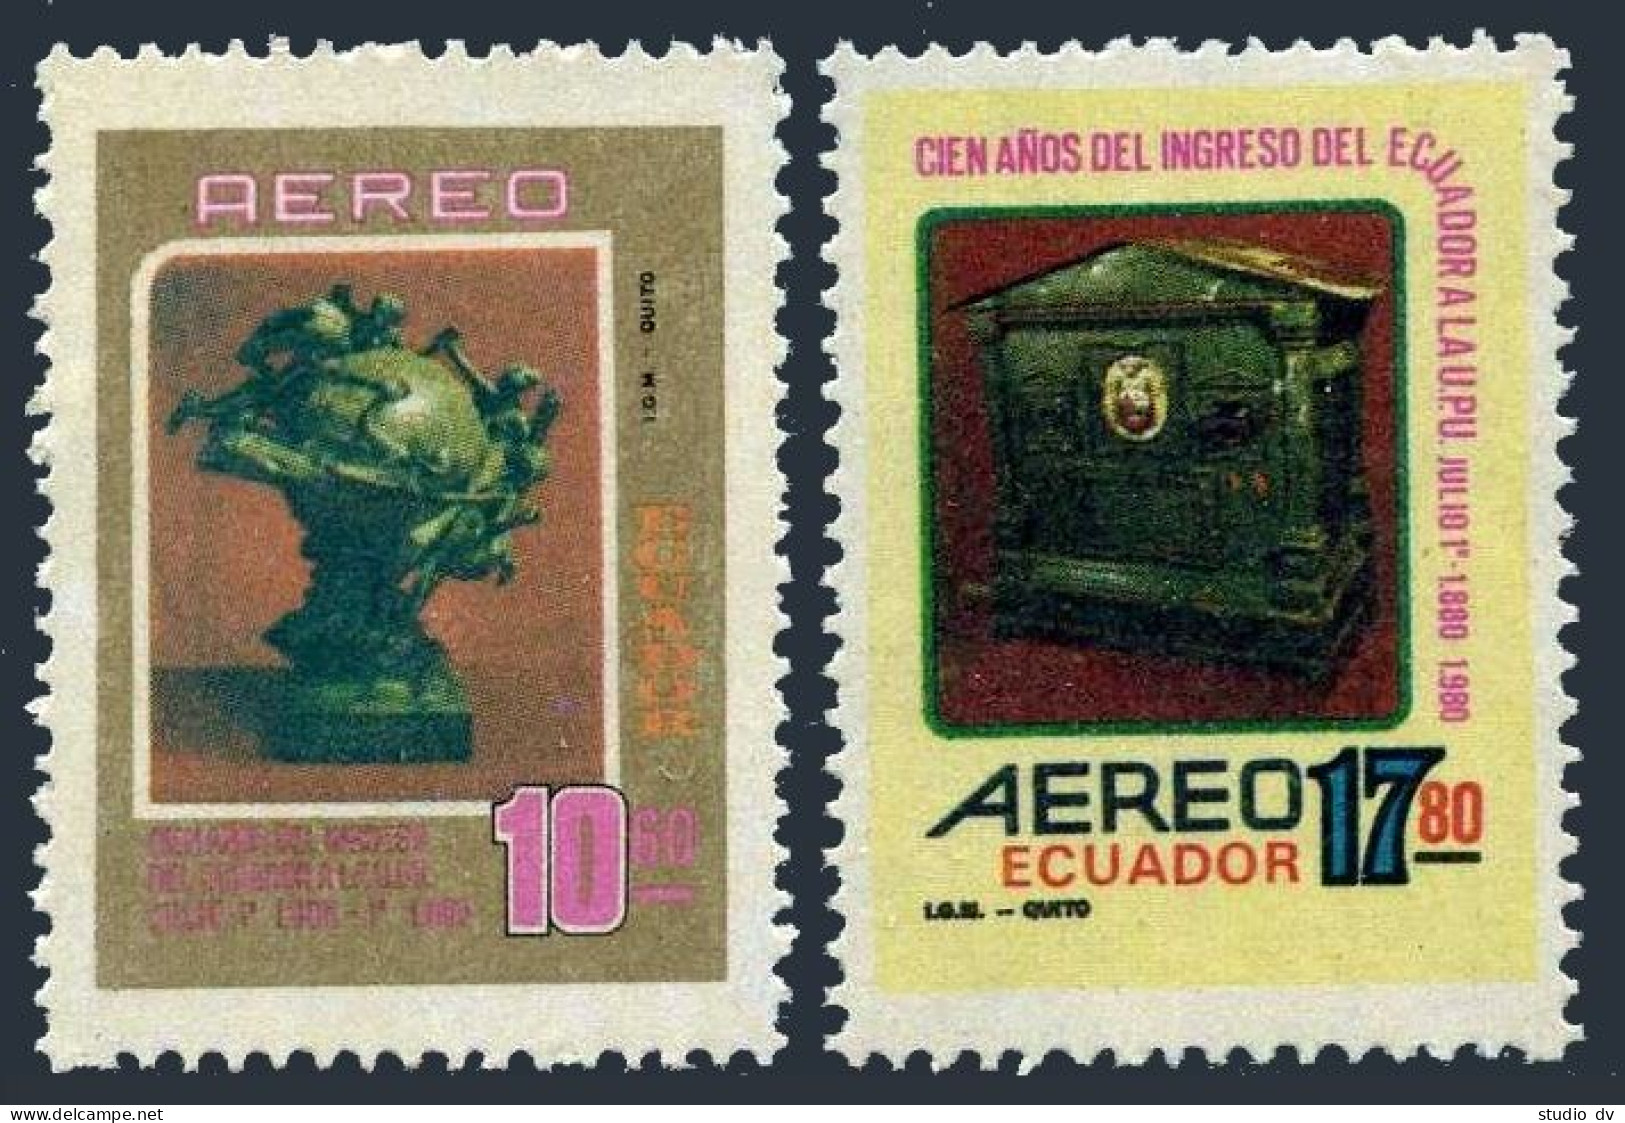 Ecuador C692-C694, MNH. Mi 1861-1862, Bl.94. UPU Membership, 100,1980. Monument. - Equateur